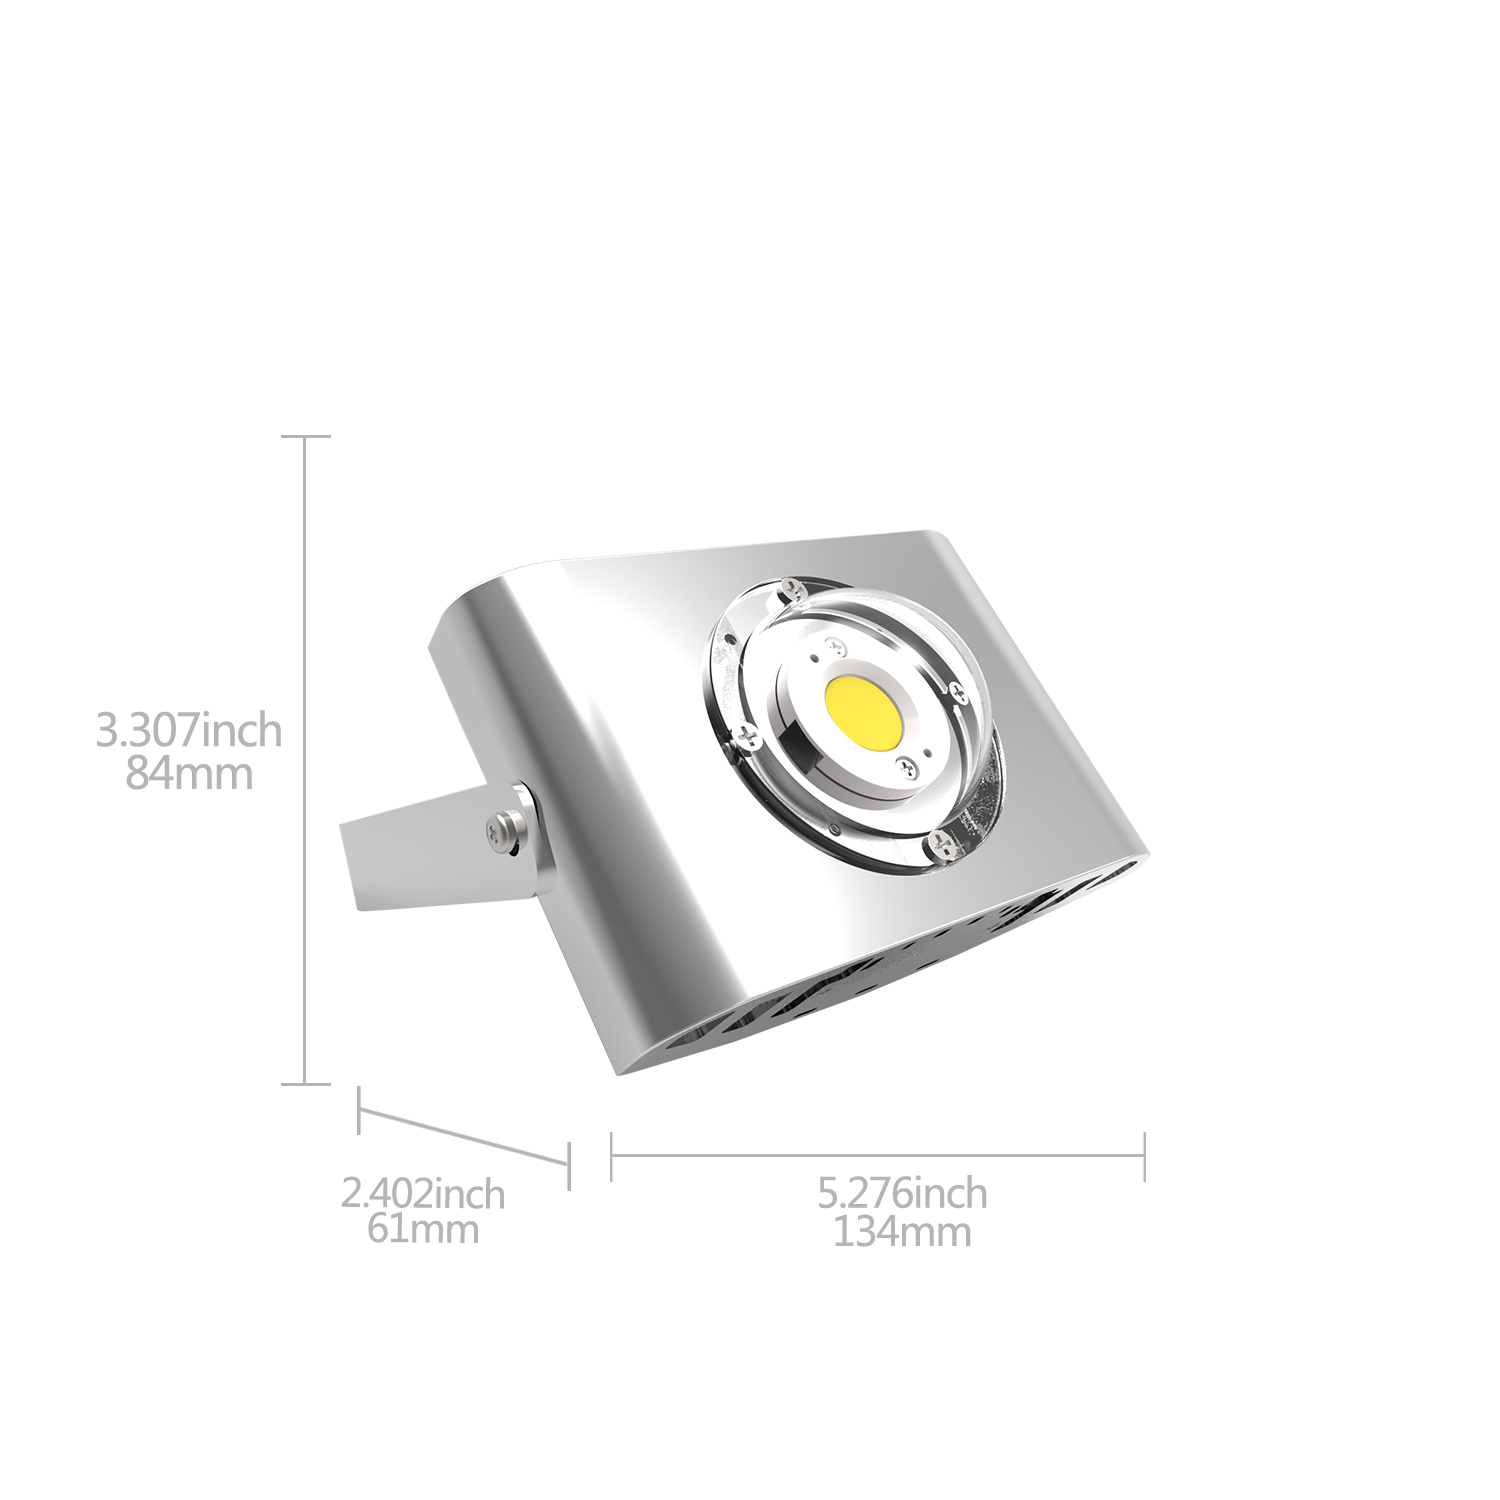 Aigostar - Confezione da 5 Faretto a LED COB，10W, 850LM，Impermeabile IP65, Luce Naturale 4000K[Classe di efficienza energetica A+]